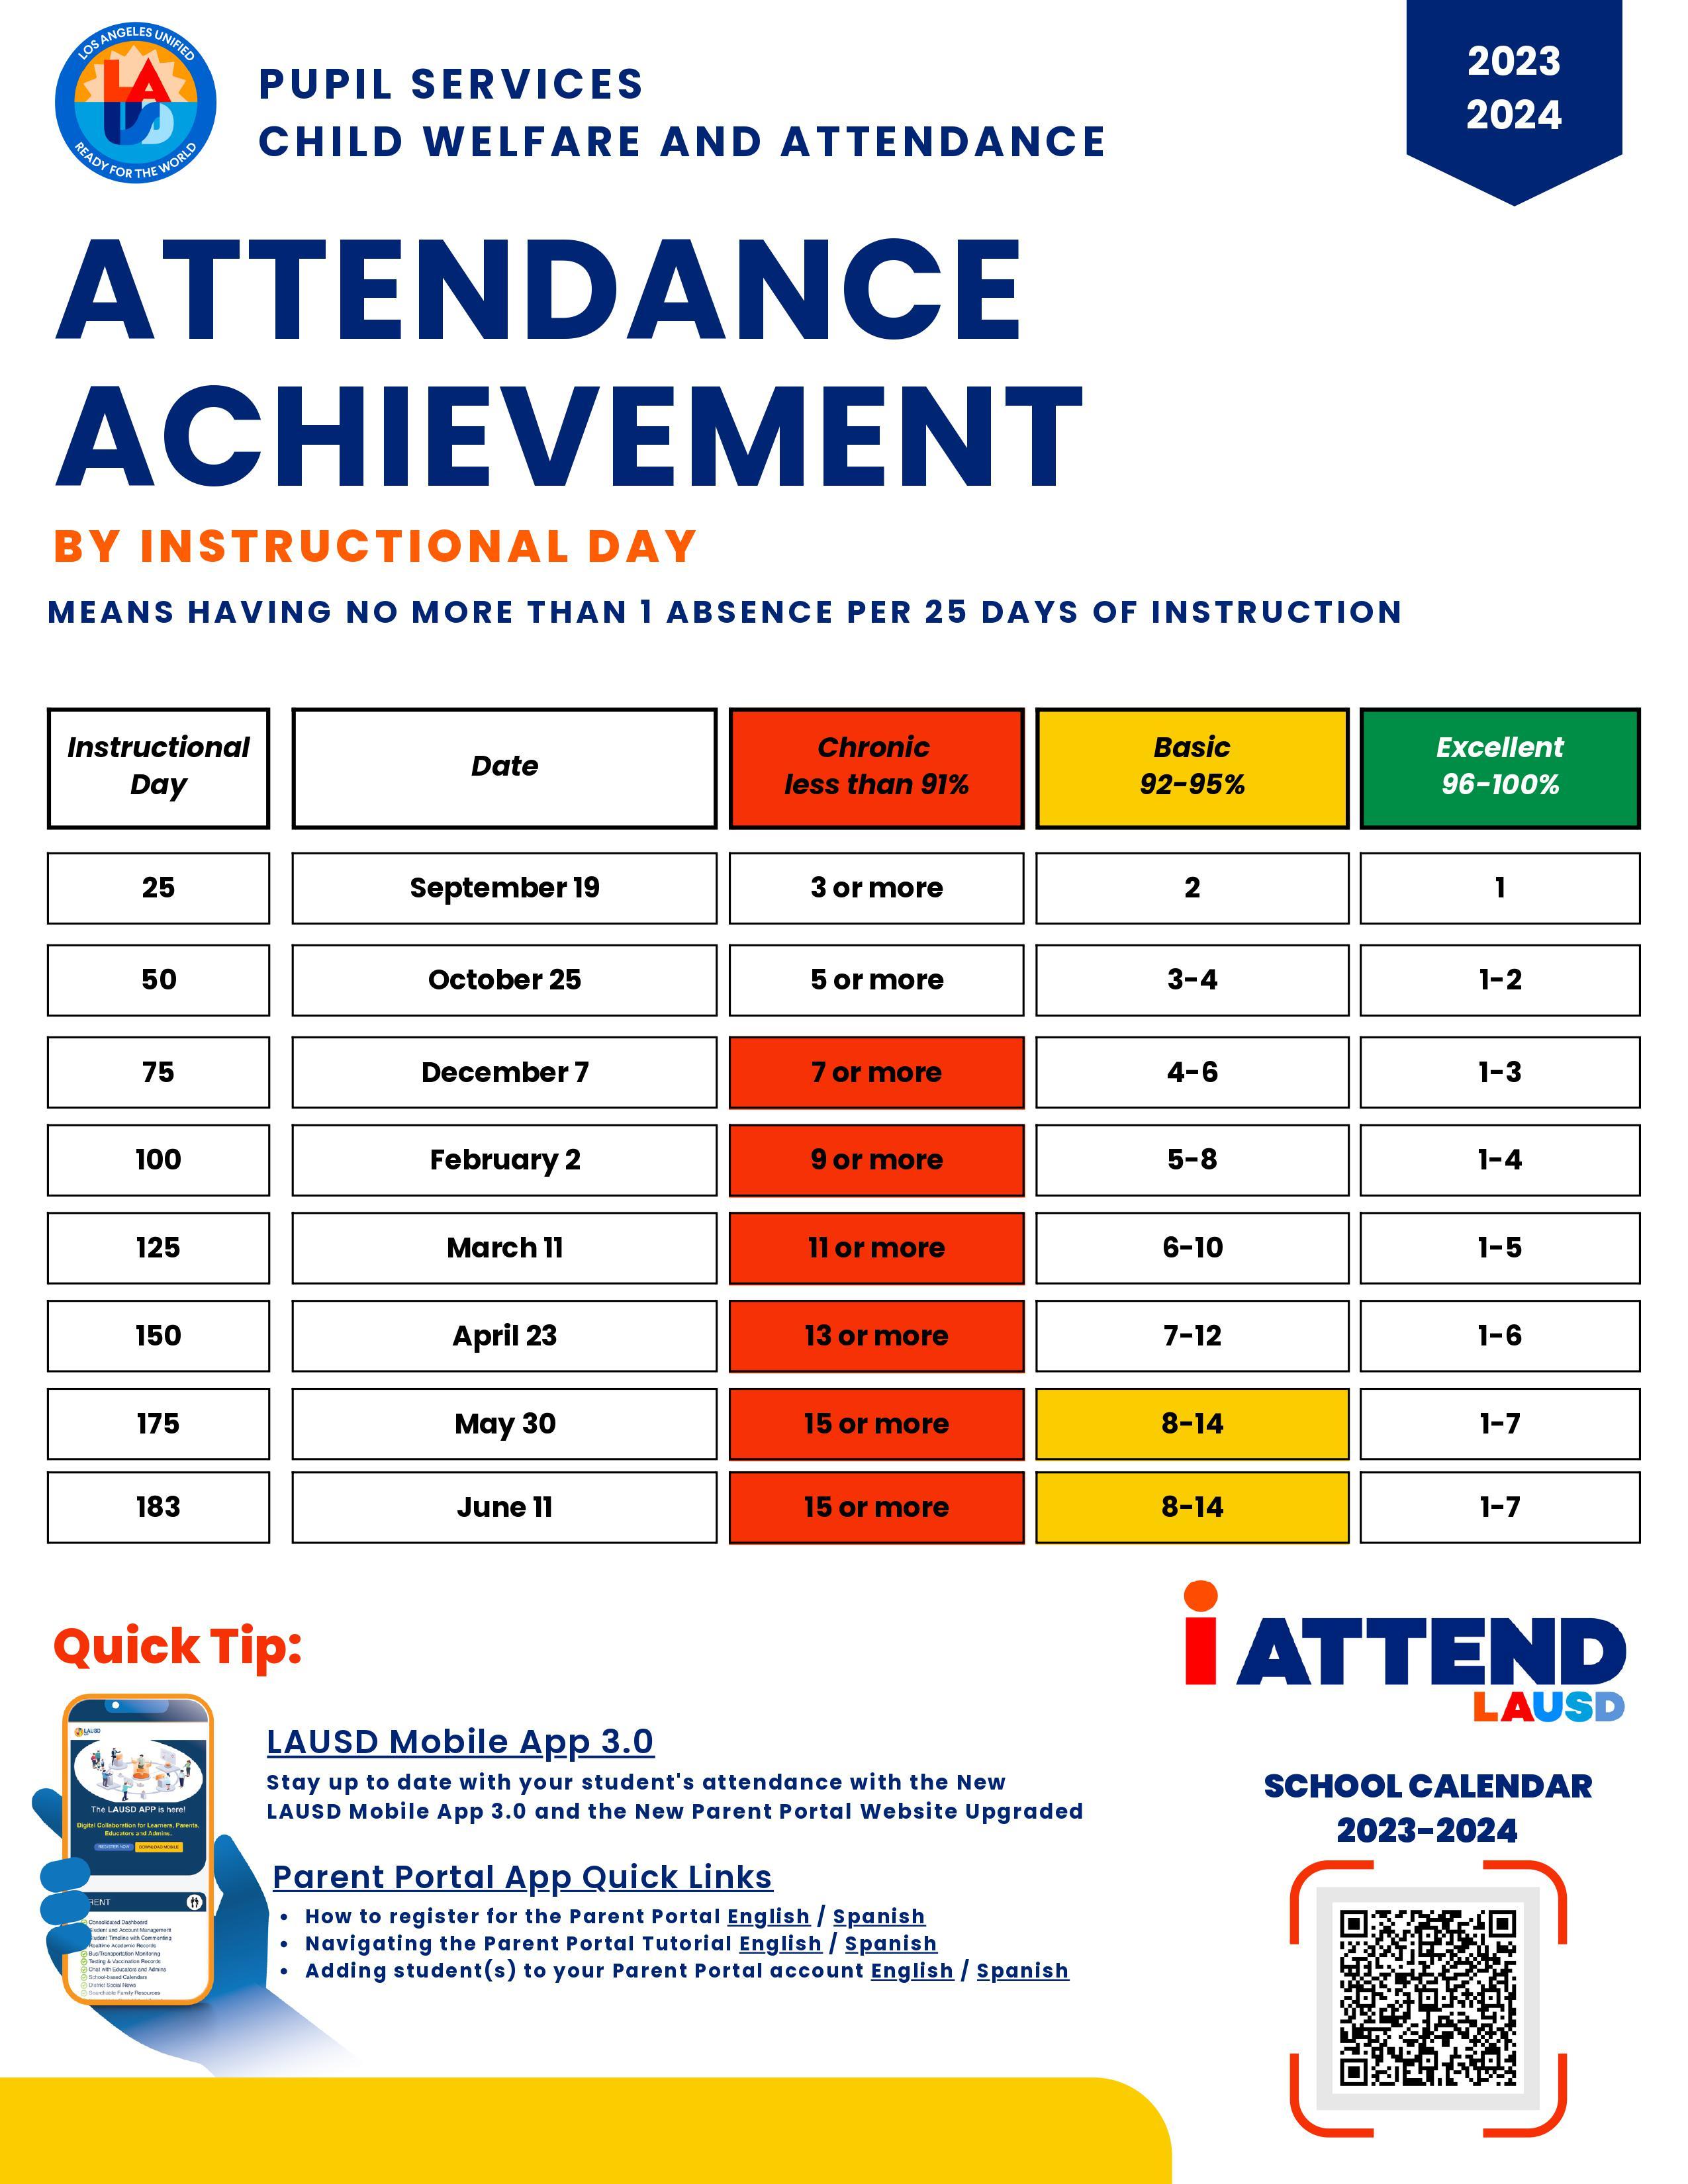 Attendance Achievement Handout 